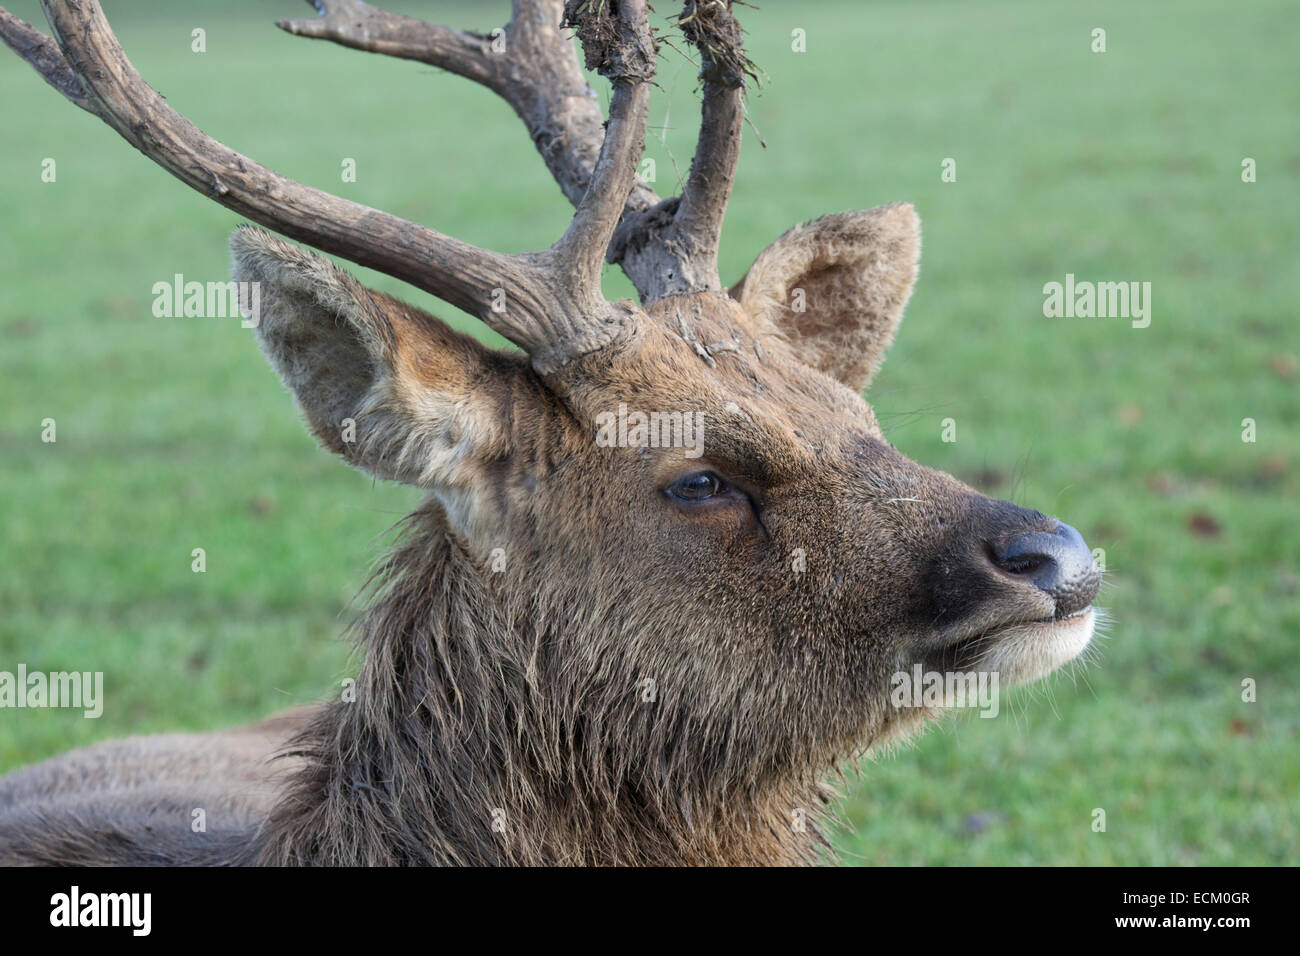 A head profile of a Barasingha Deer Stock Photo